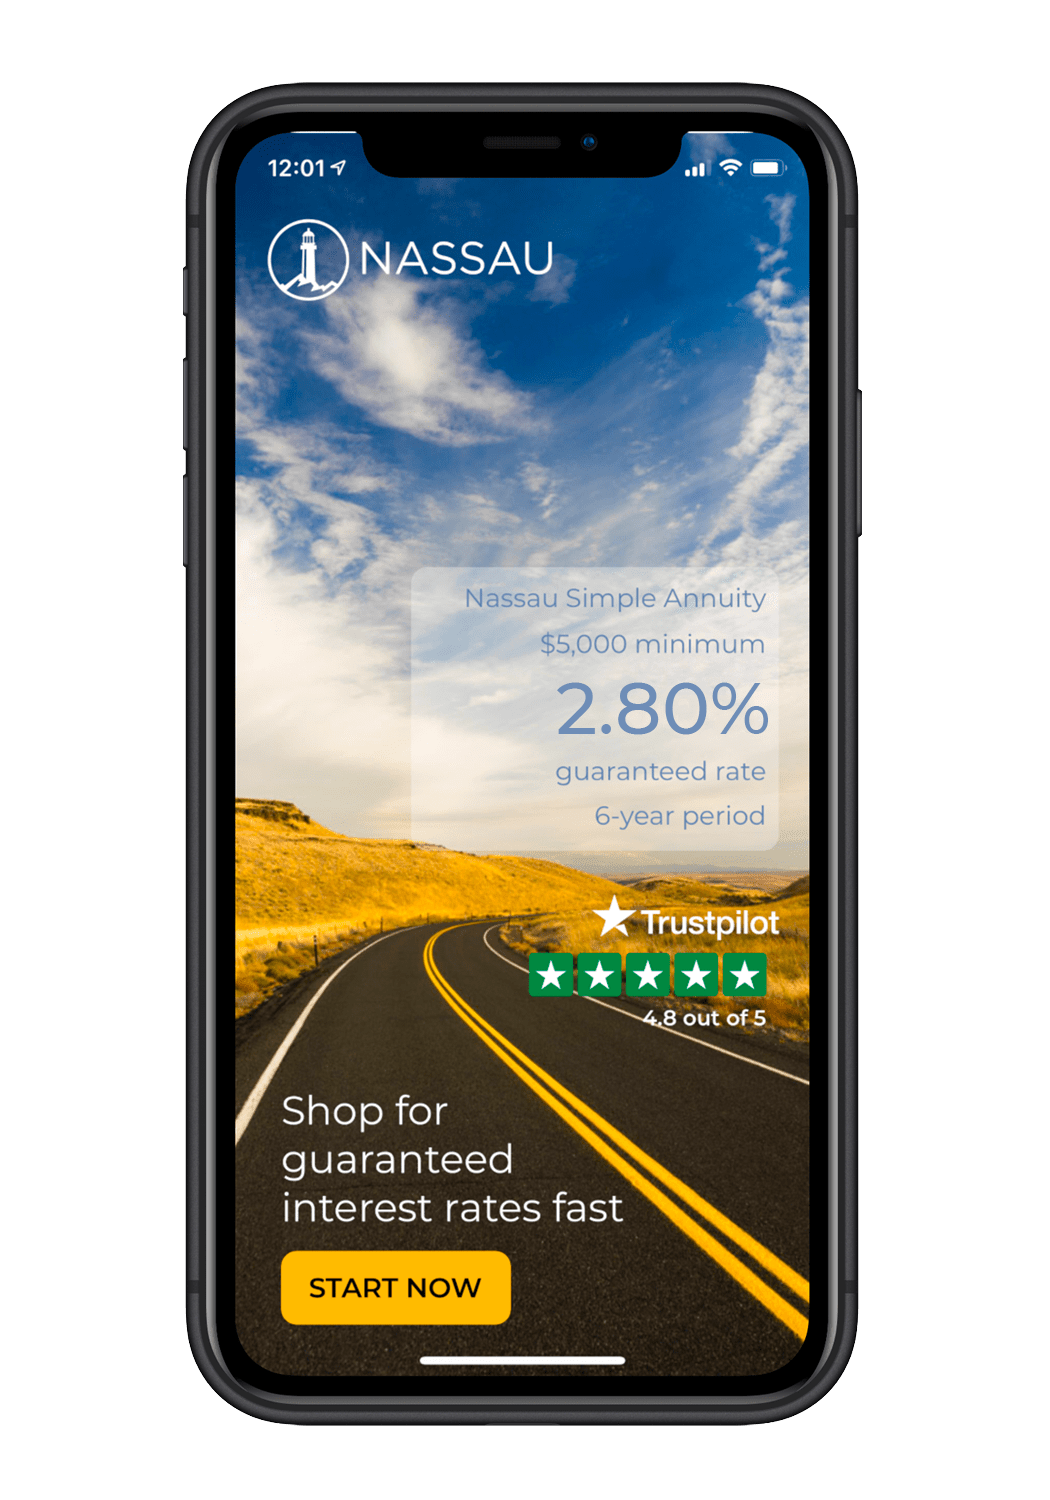 Nassau simple annuity app mobile phone image